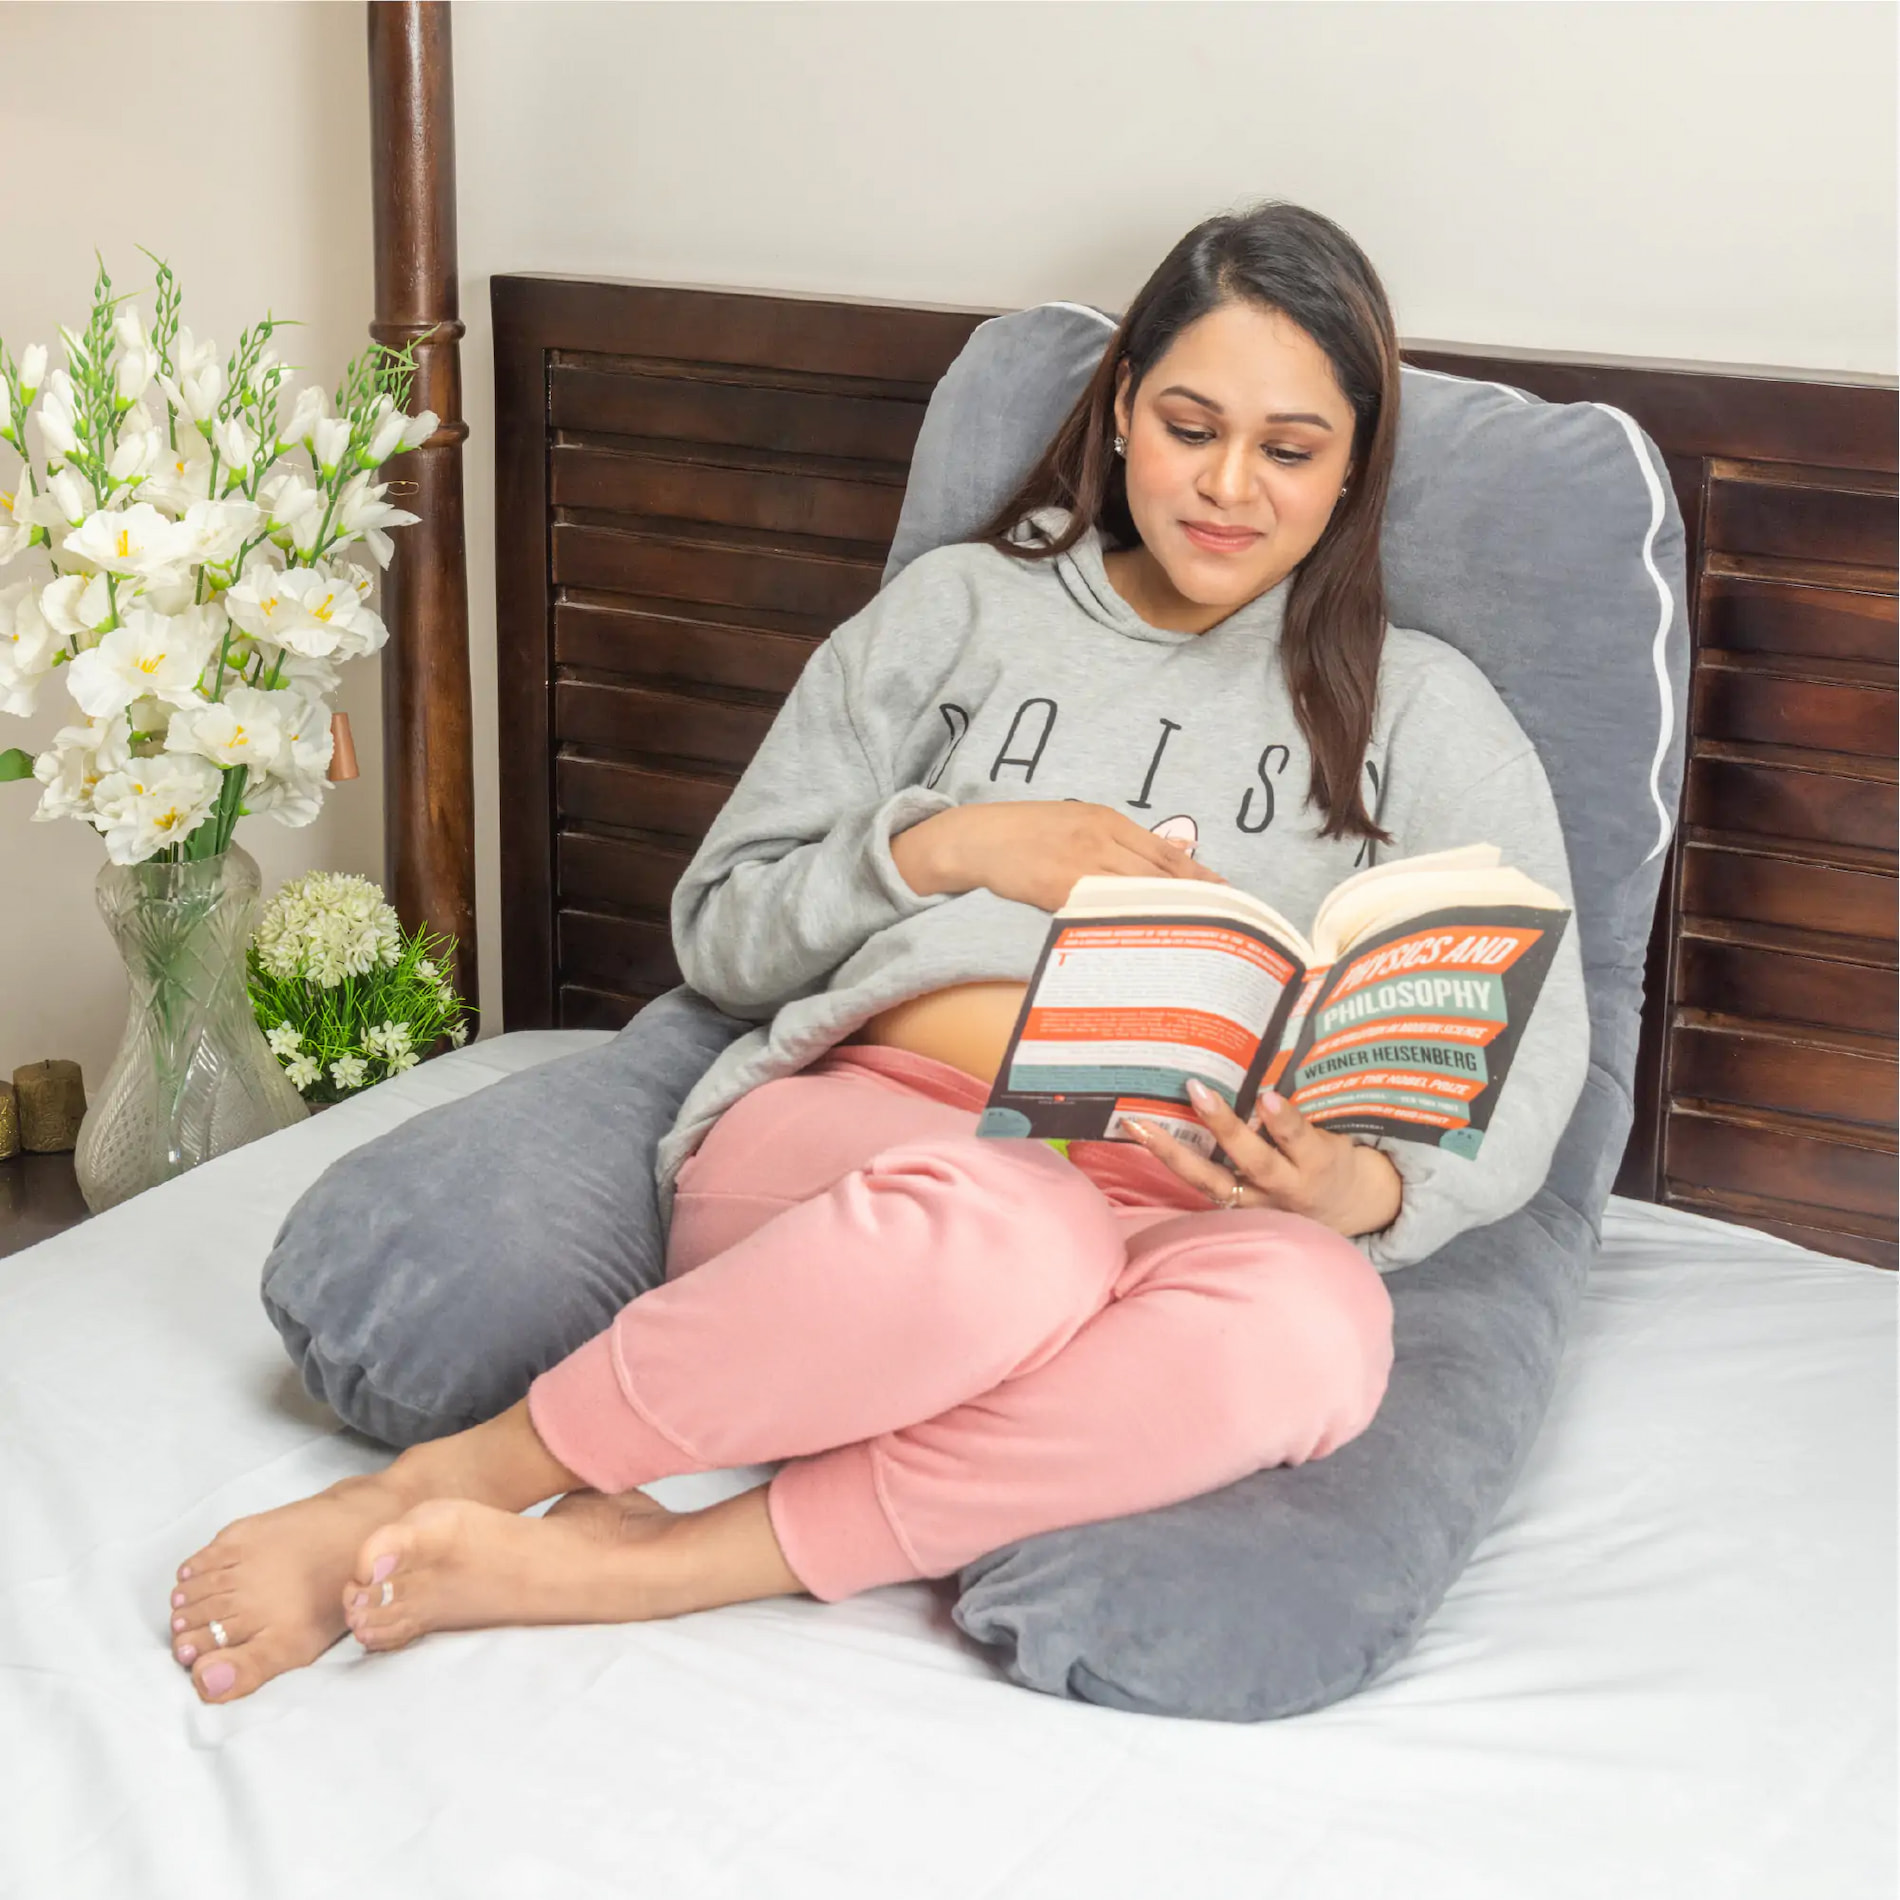 Premium Pregnancy Pillows for Sleeping - Grey